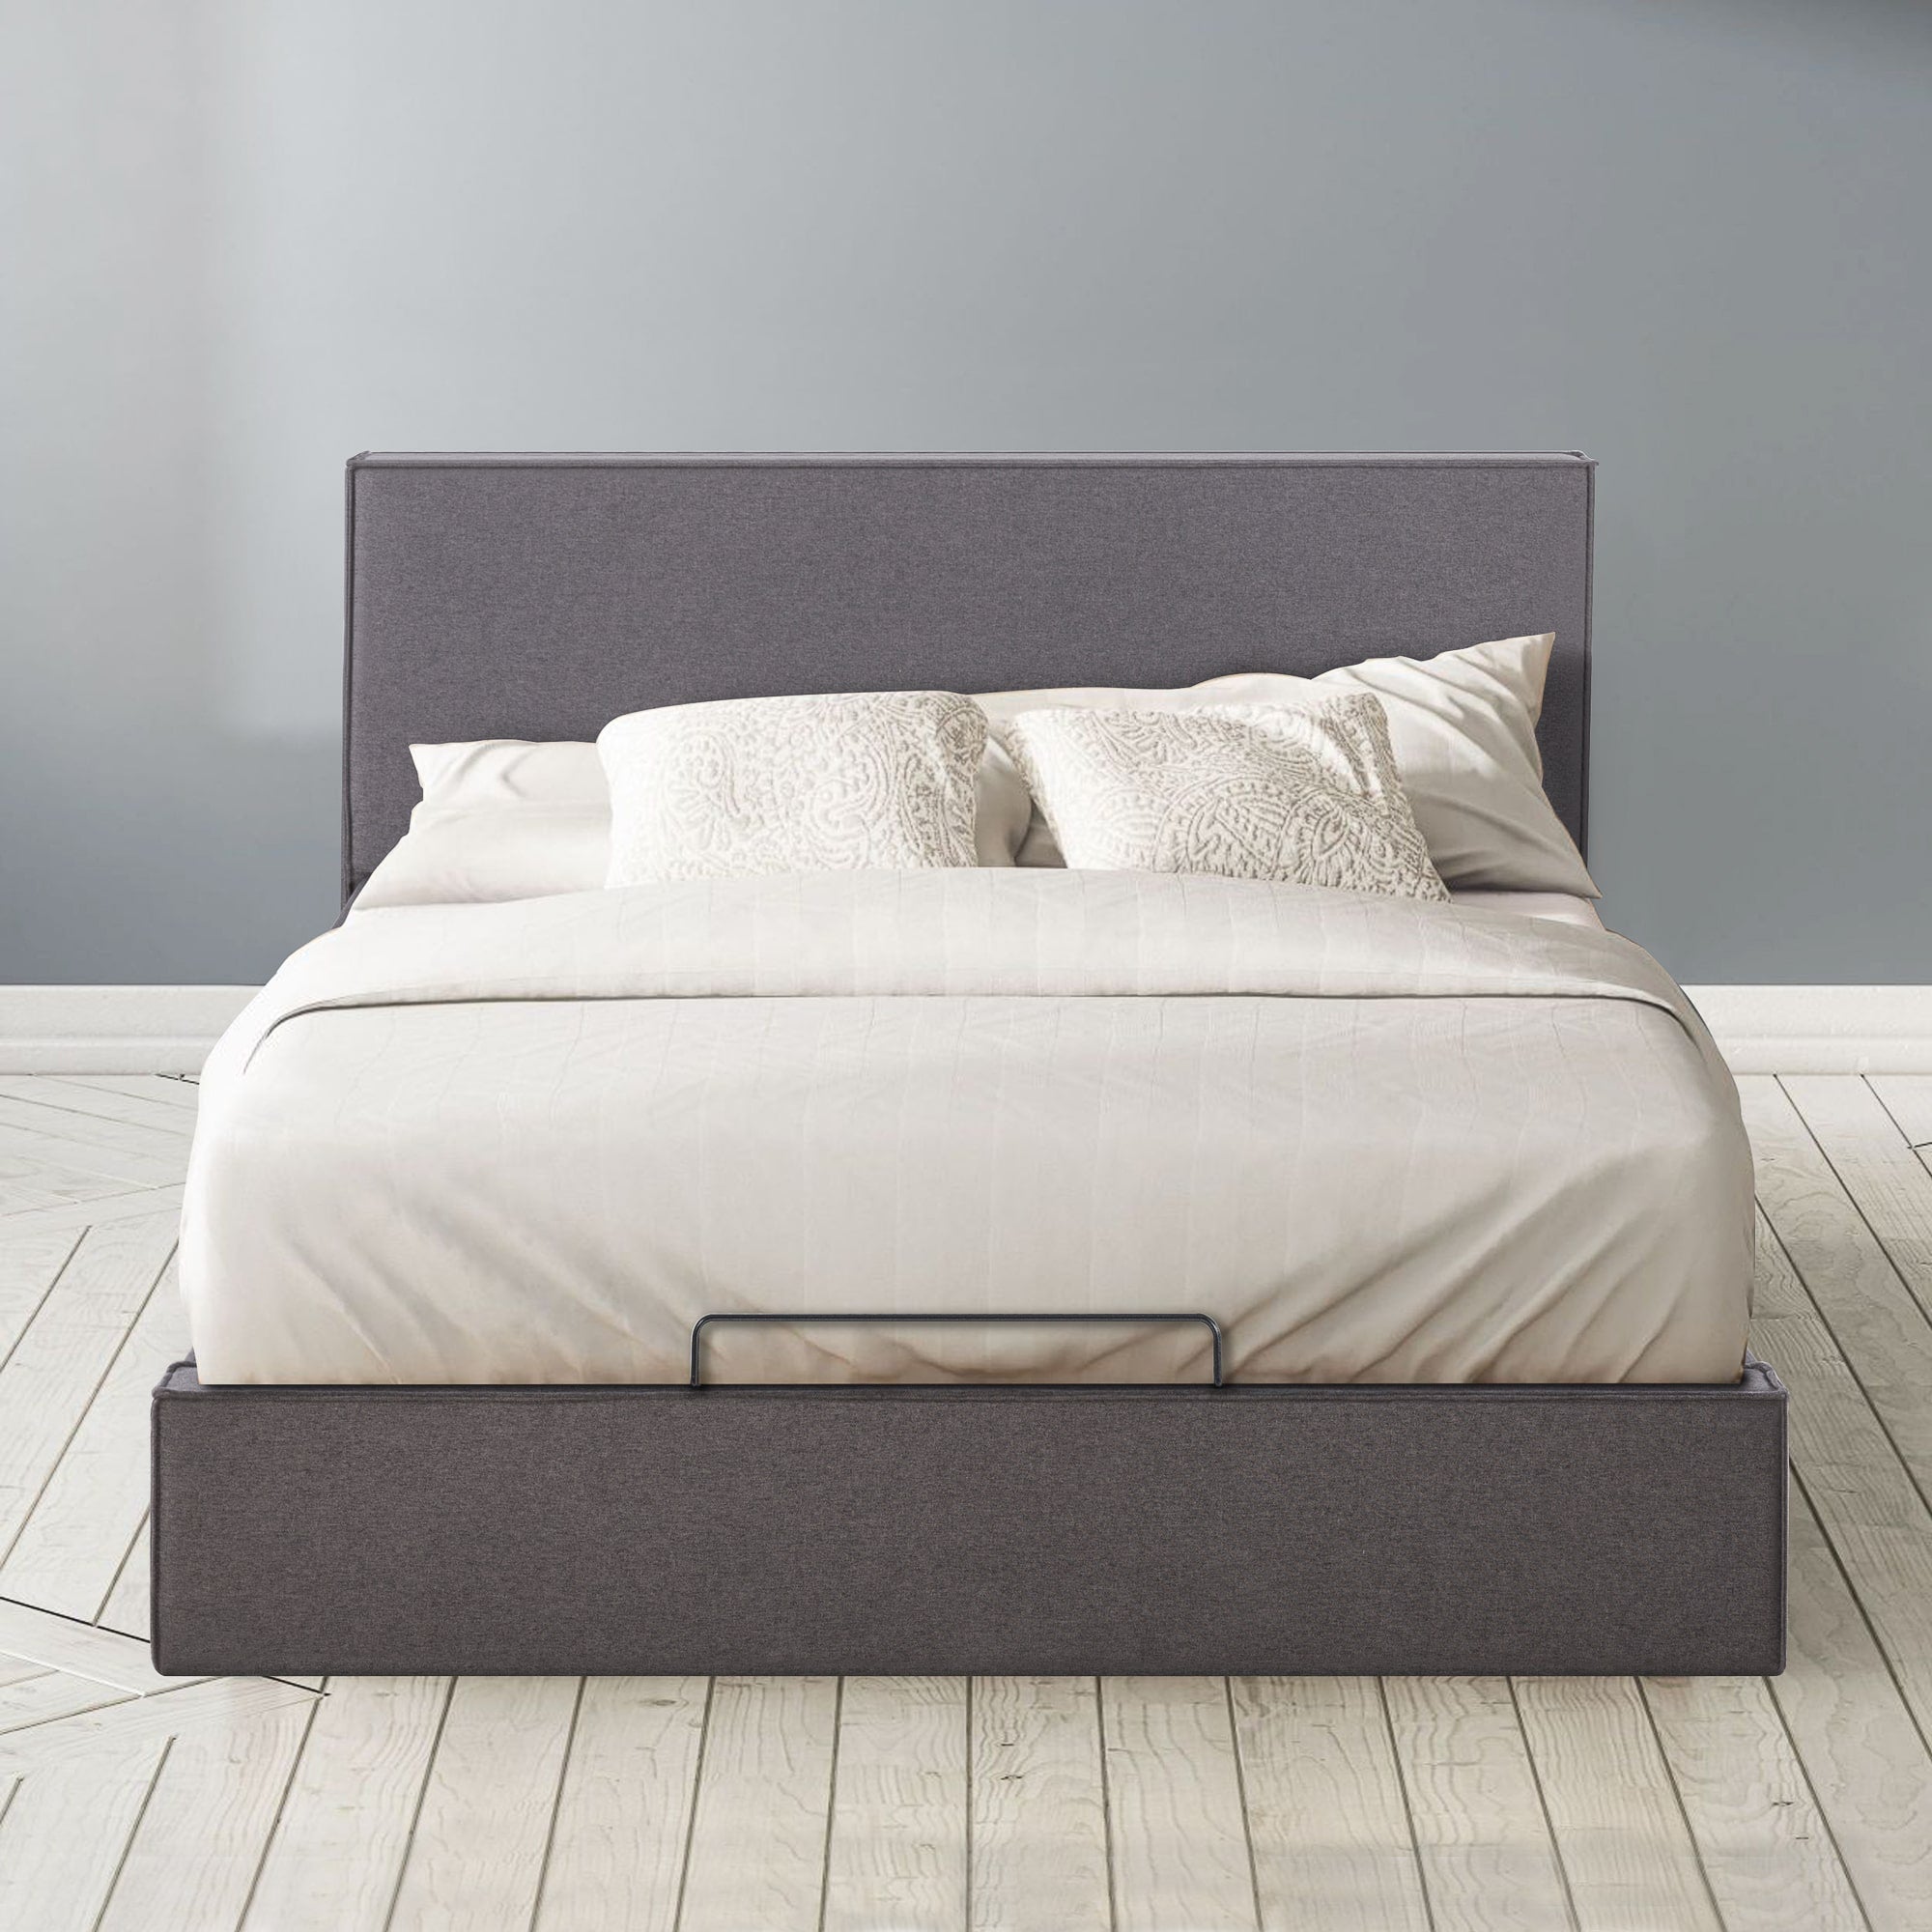 Finley Upholstered Platform Bed Frame with Lifting Storage